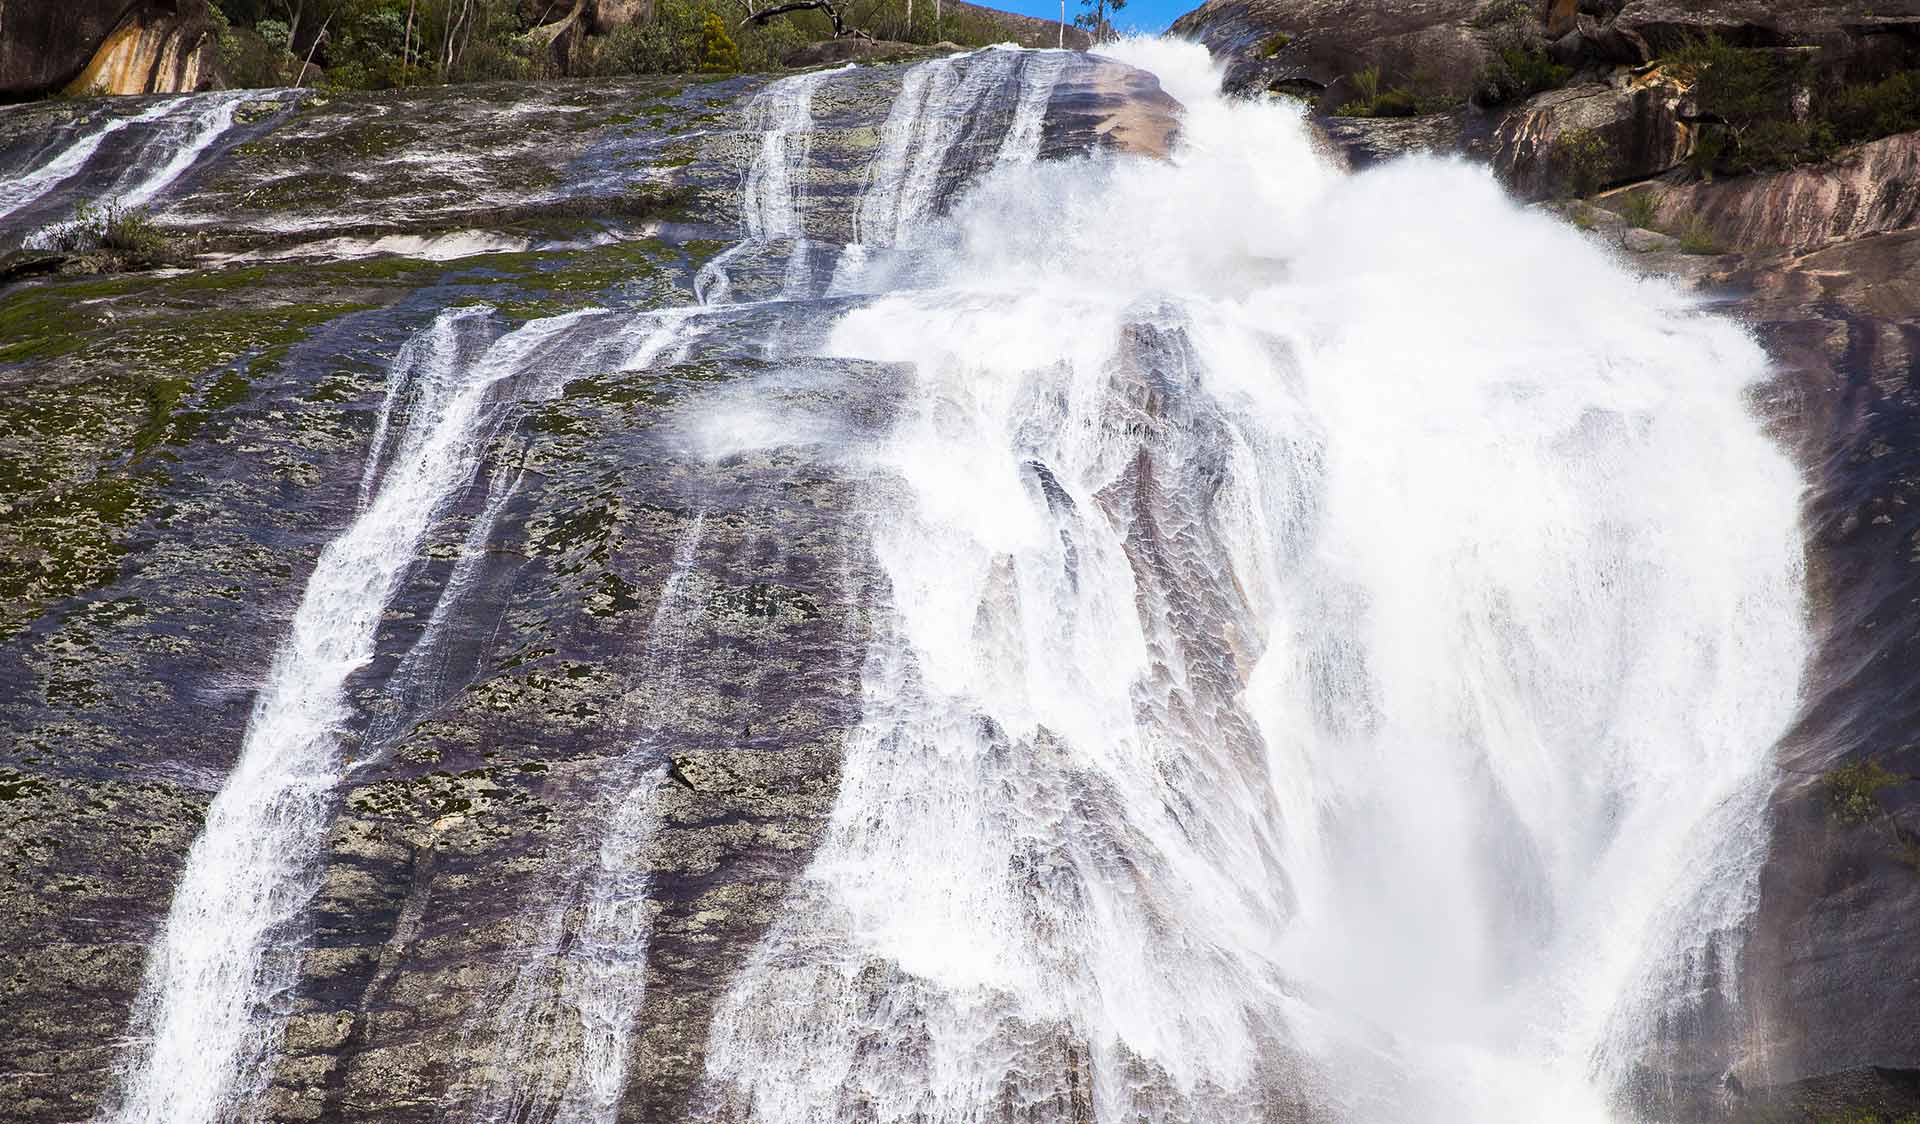 Water cascades down the granite rockface at Eurobin Falls.